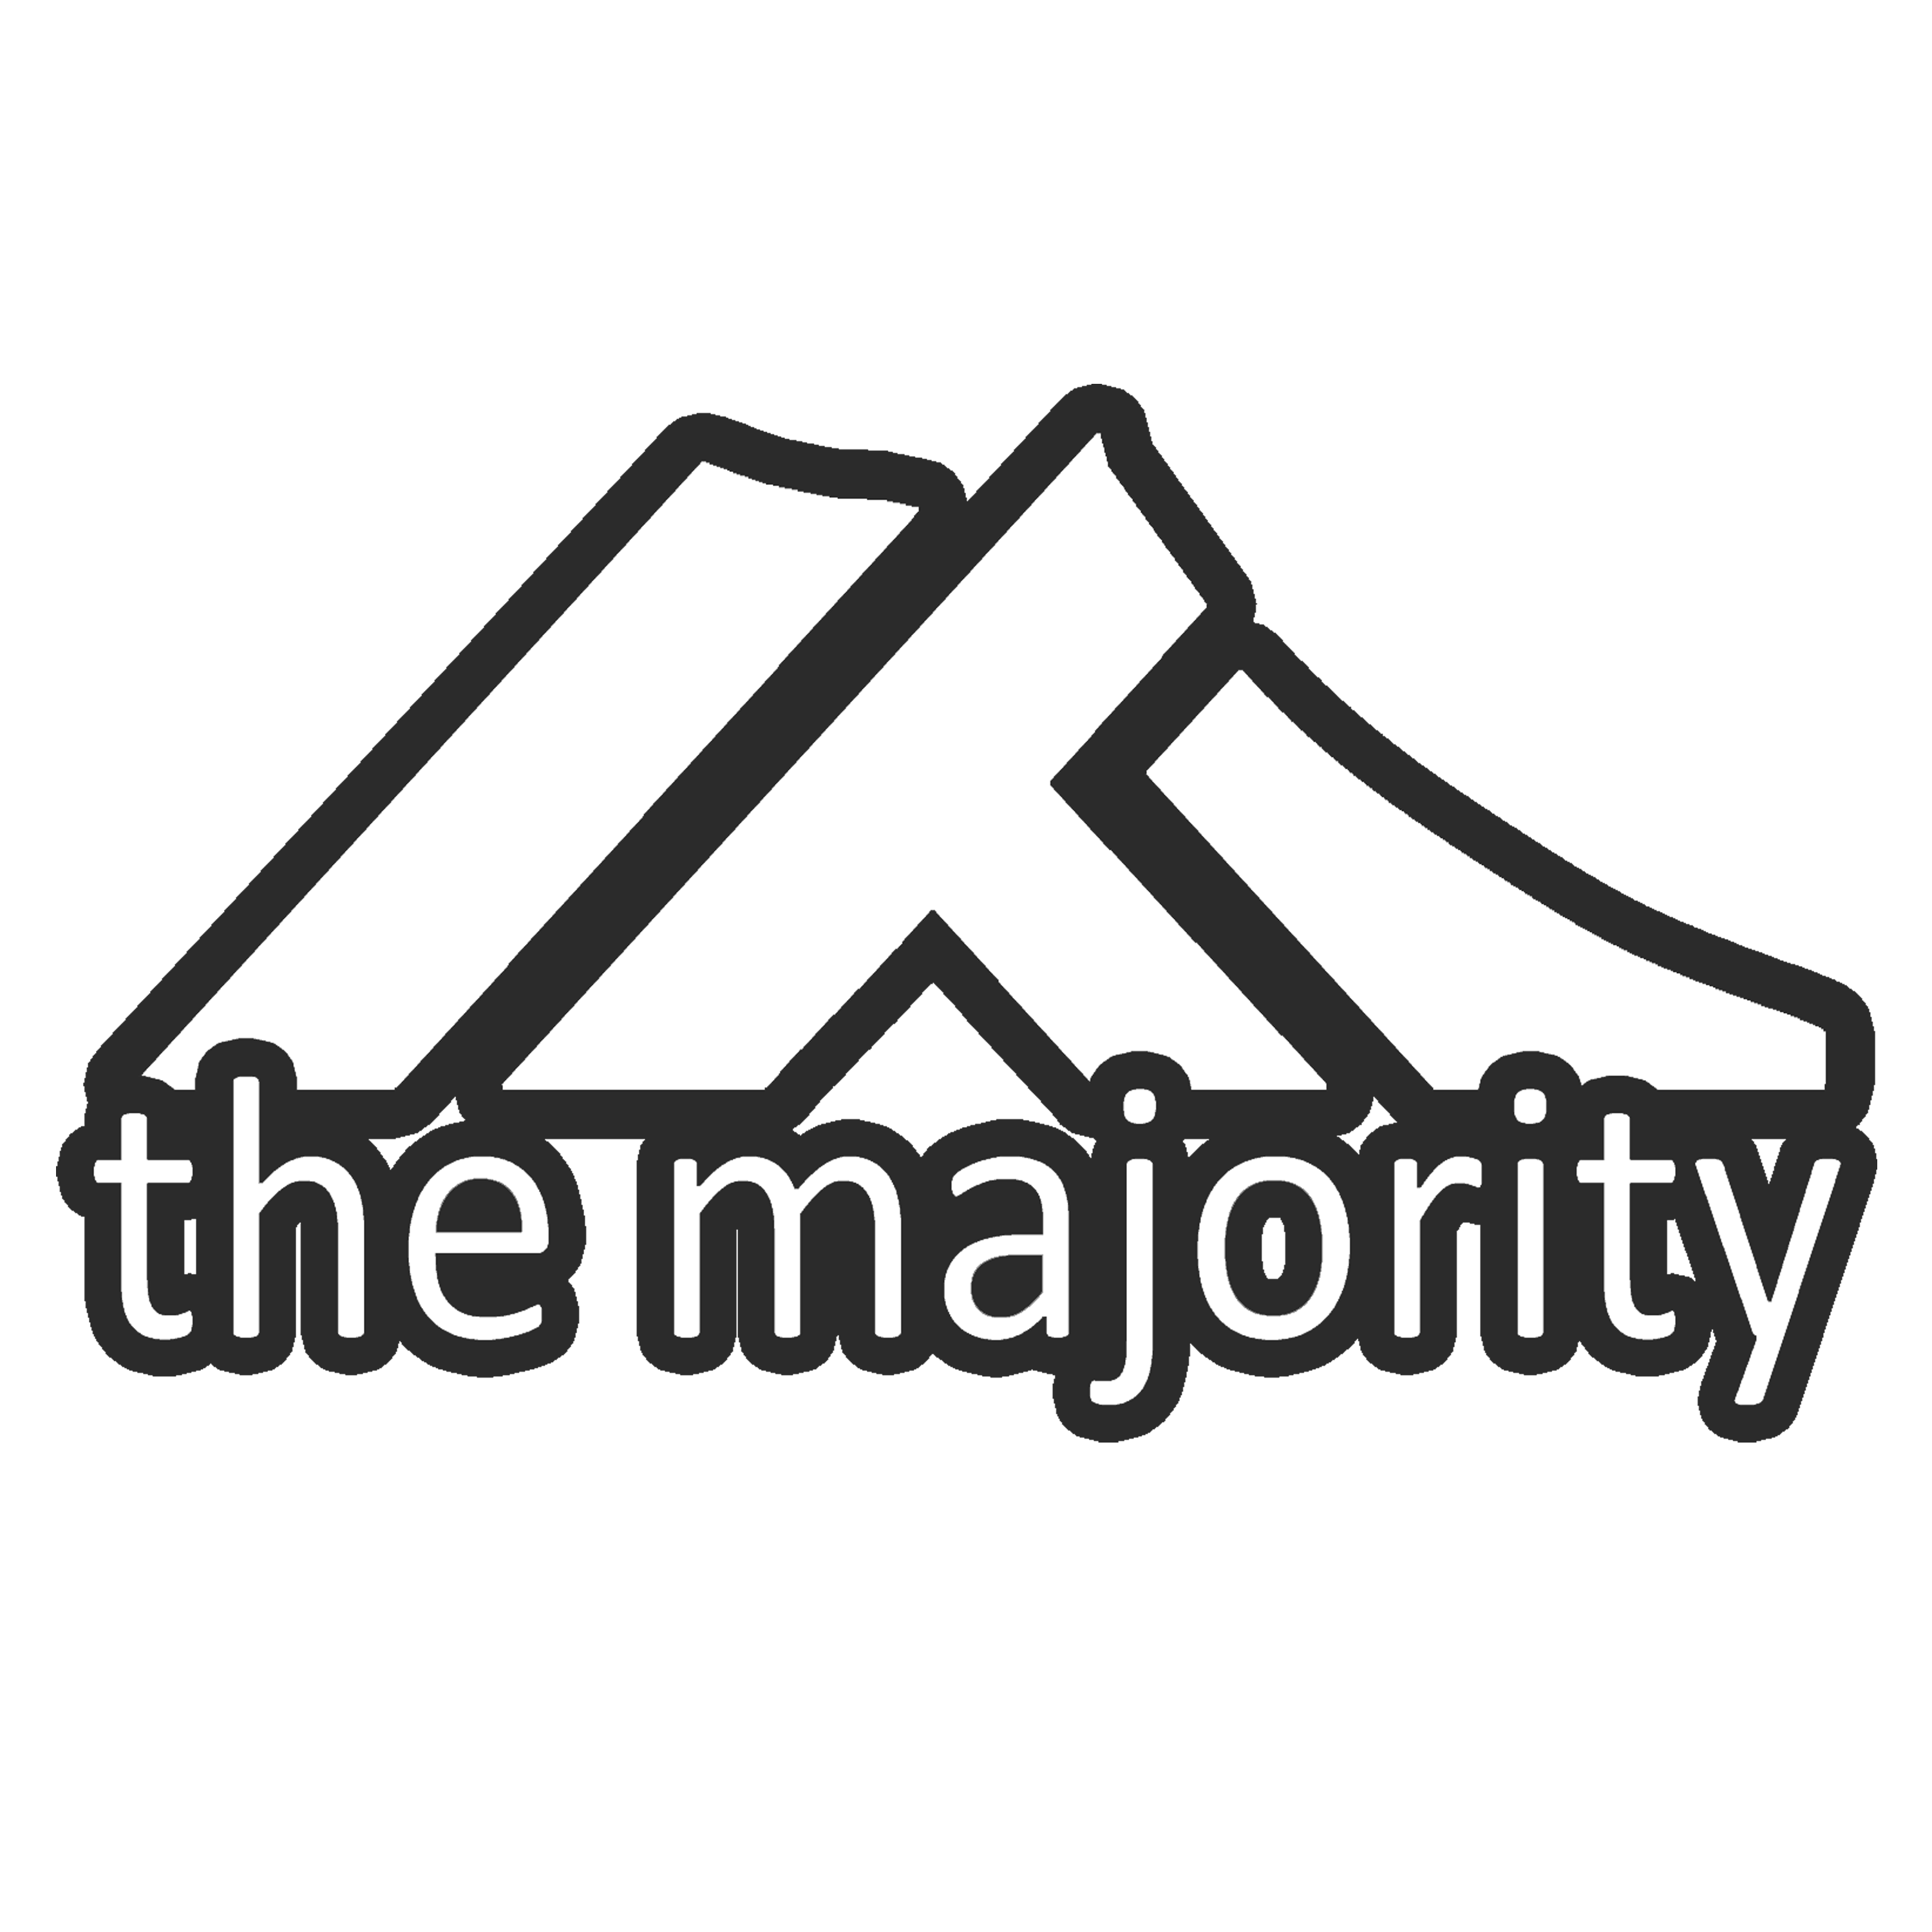 The Majority